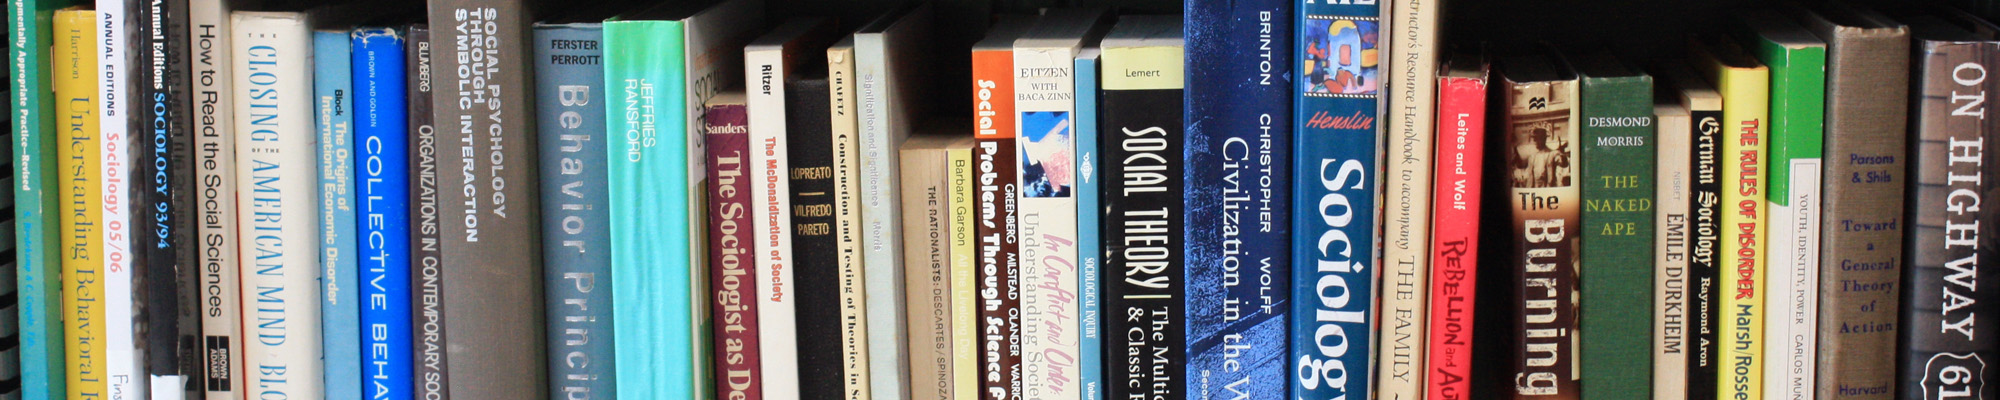 sociology books on shelf